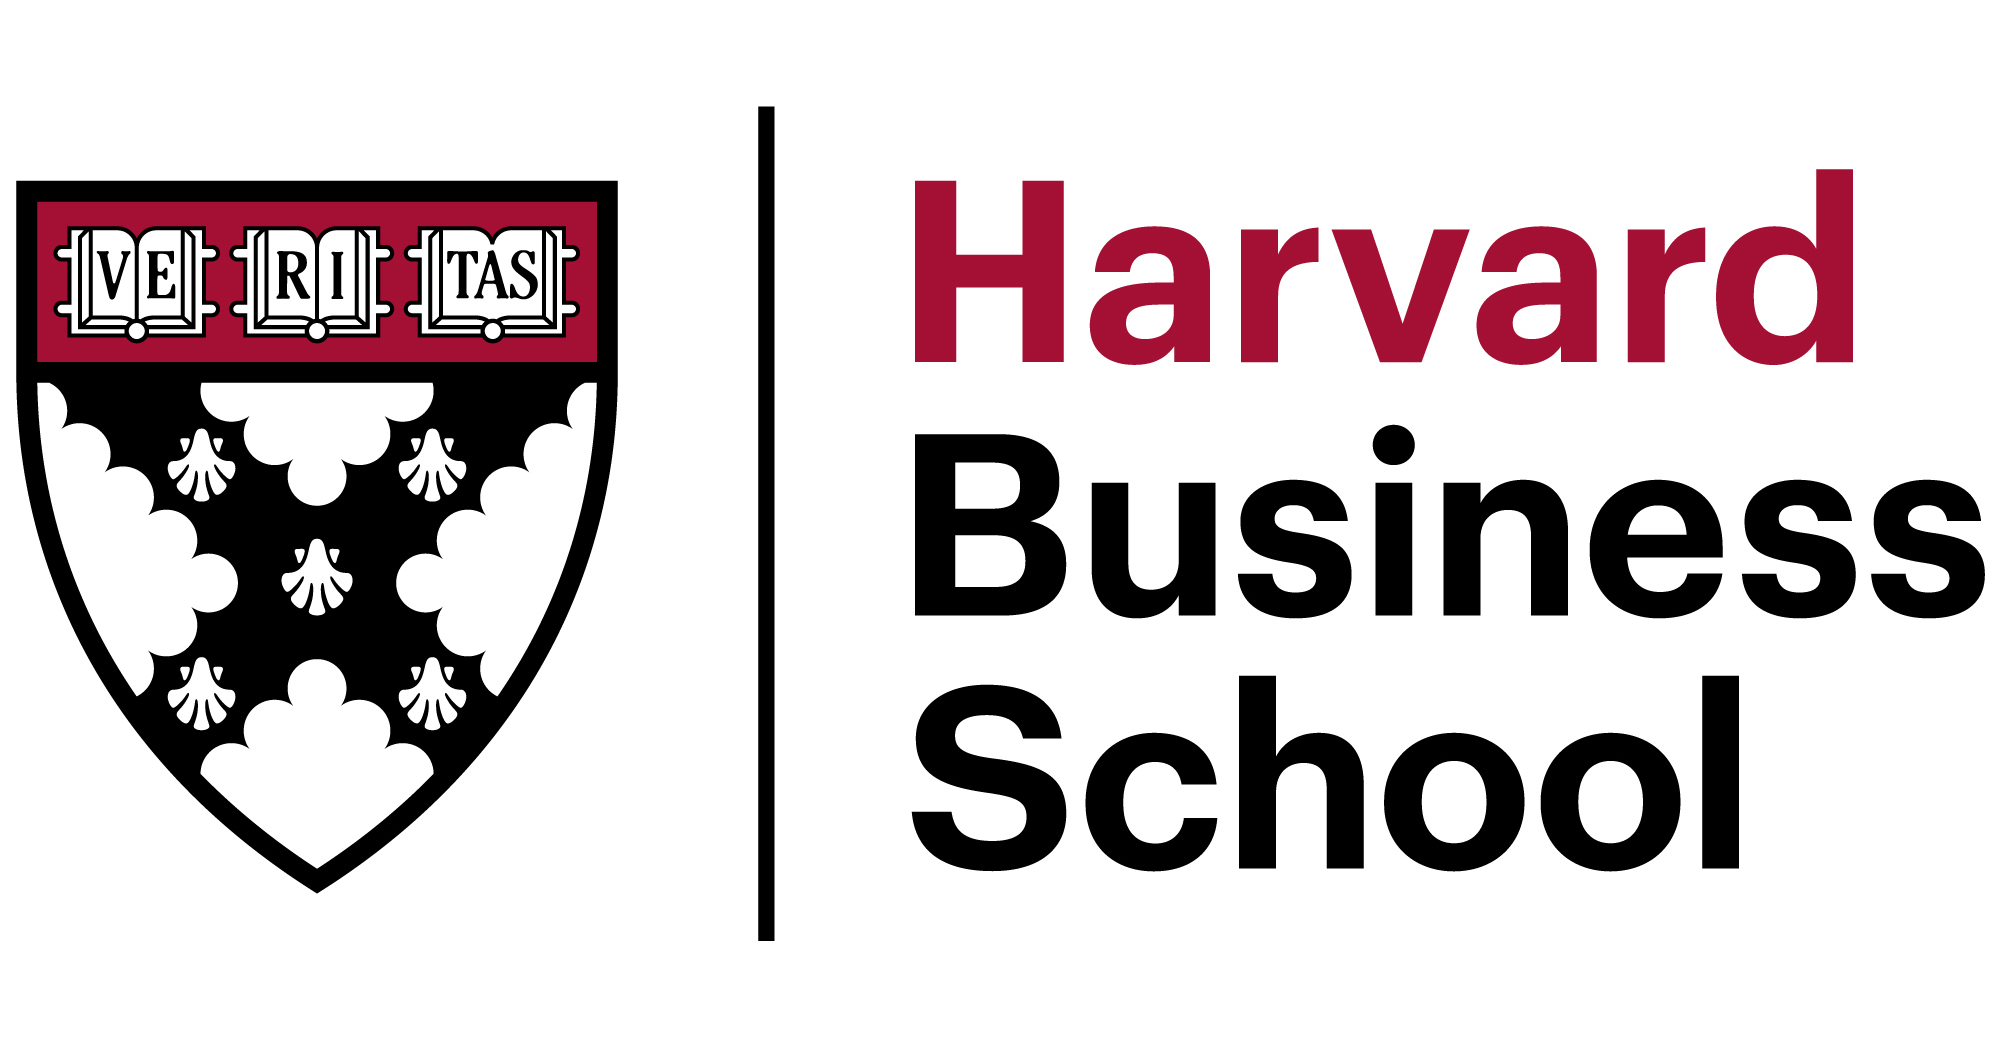 harvard business school continuing education